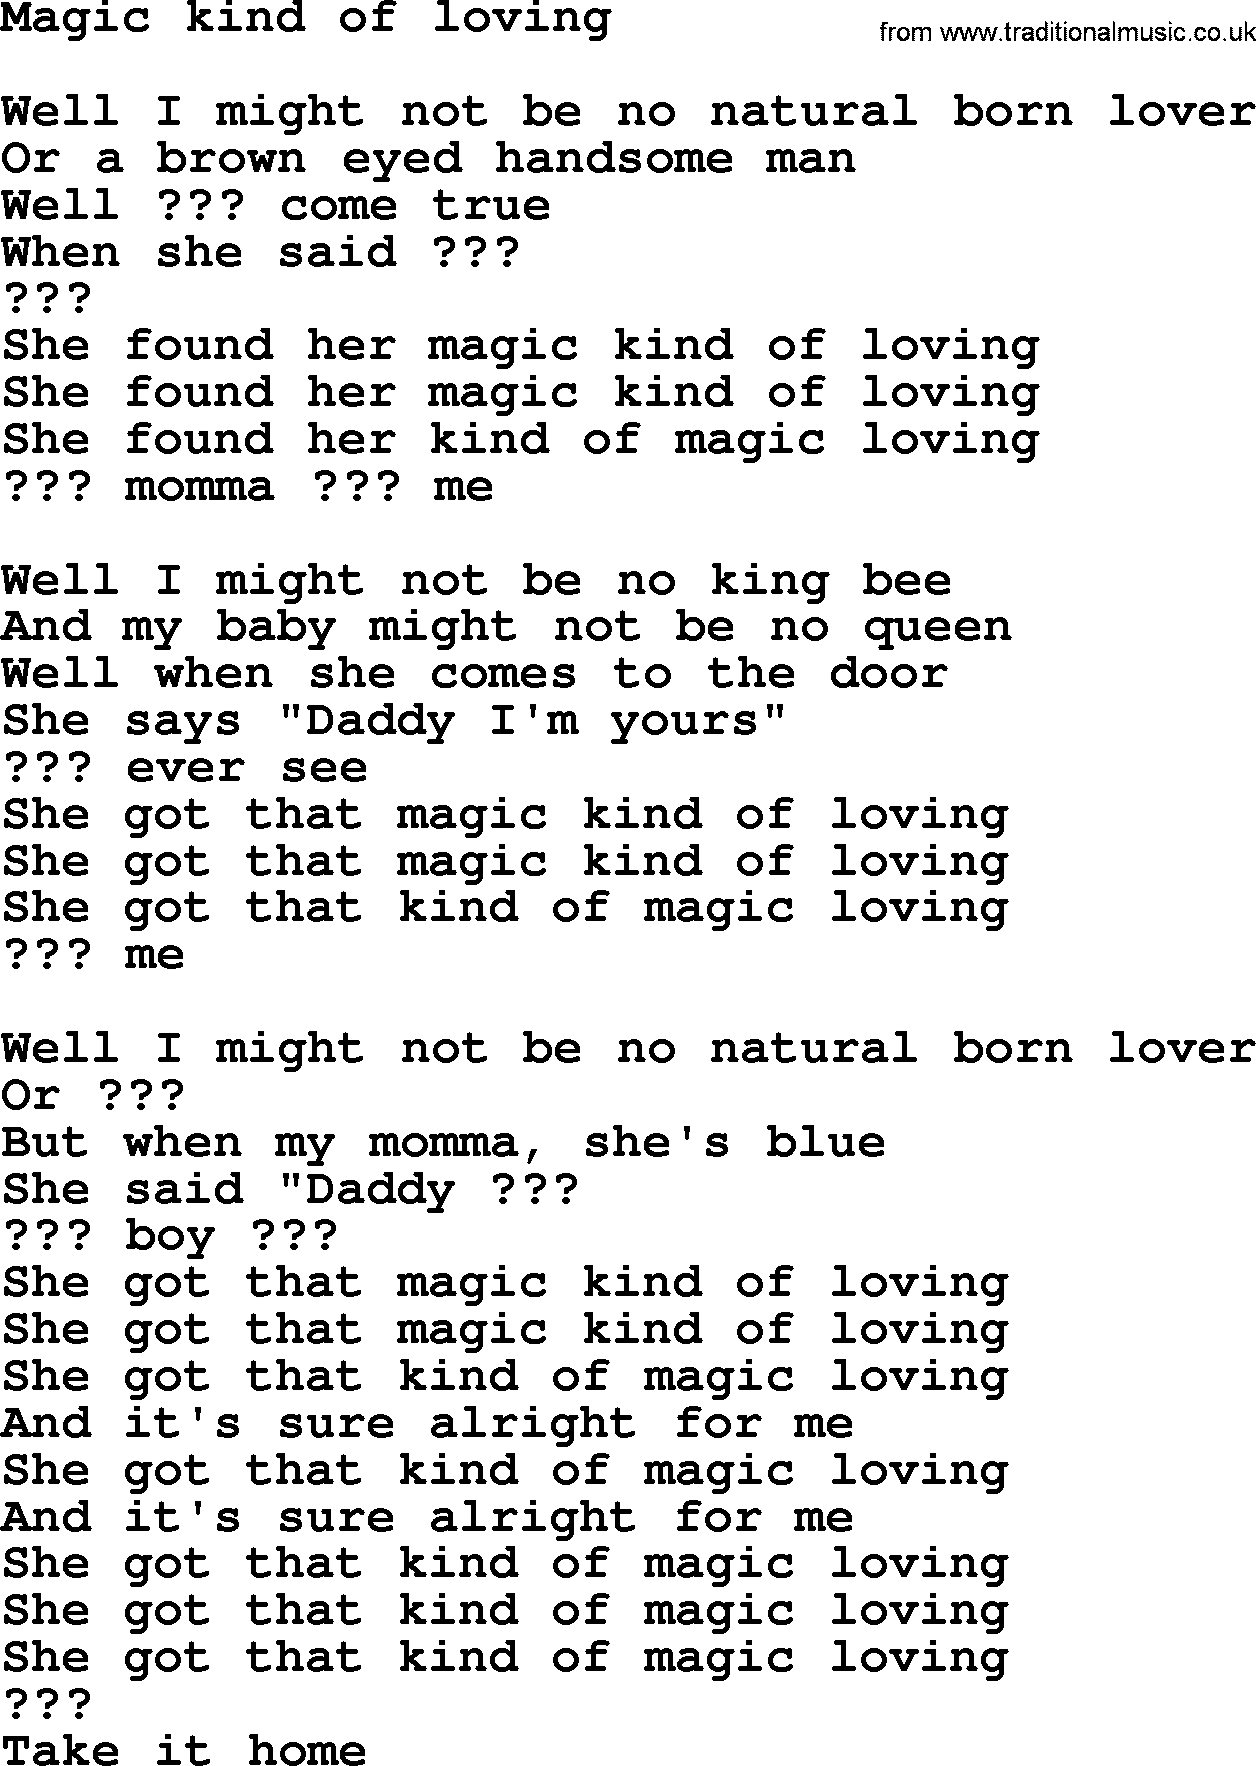 Bruce Springsteen song: Magic Kind Of Loving lyrics